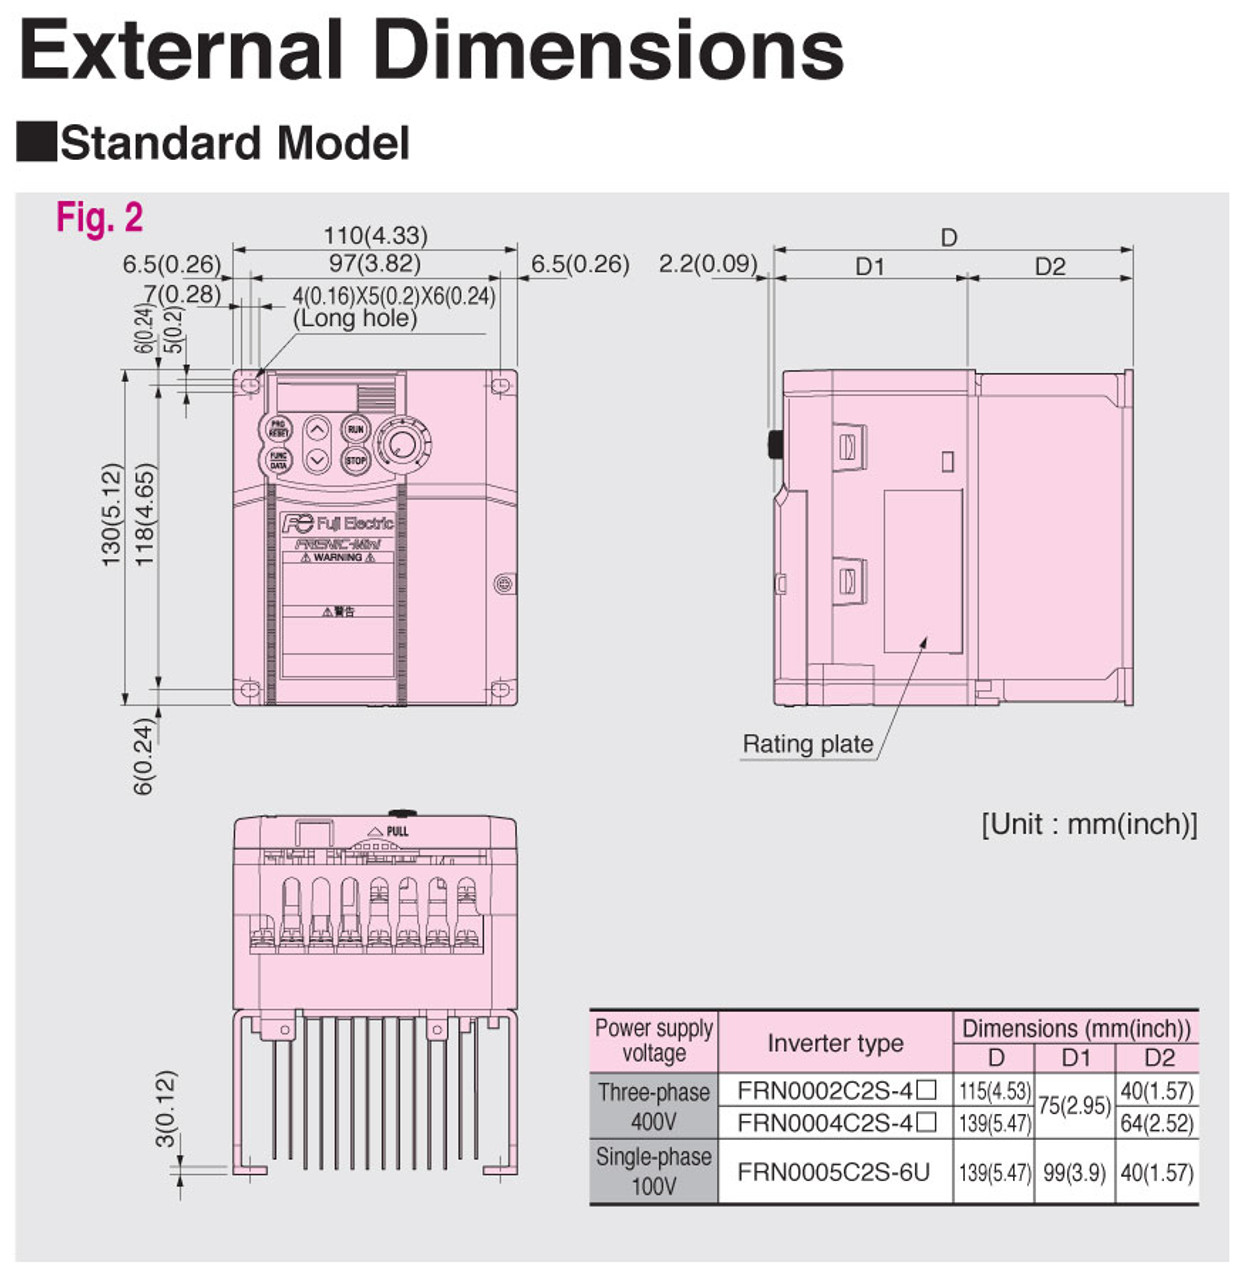 FRN0002C2S-4U - Dimensions